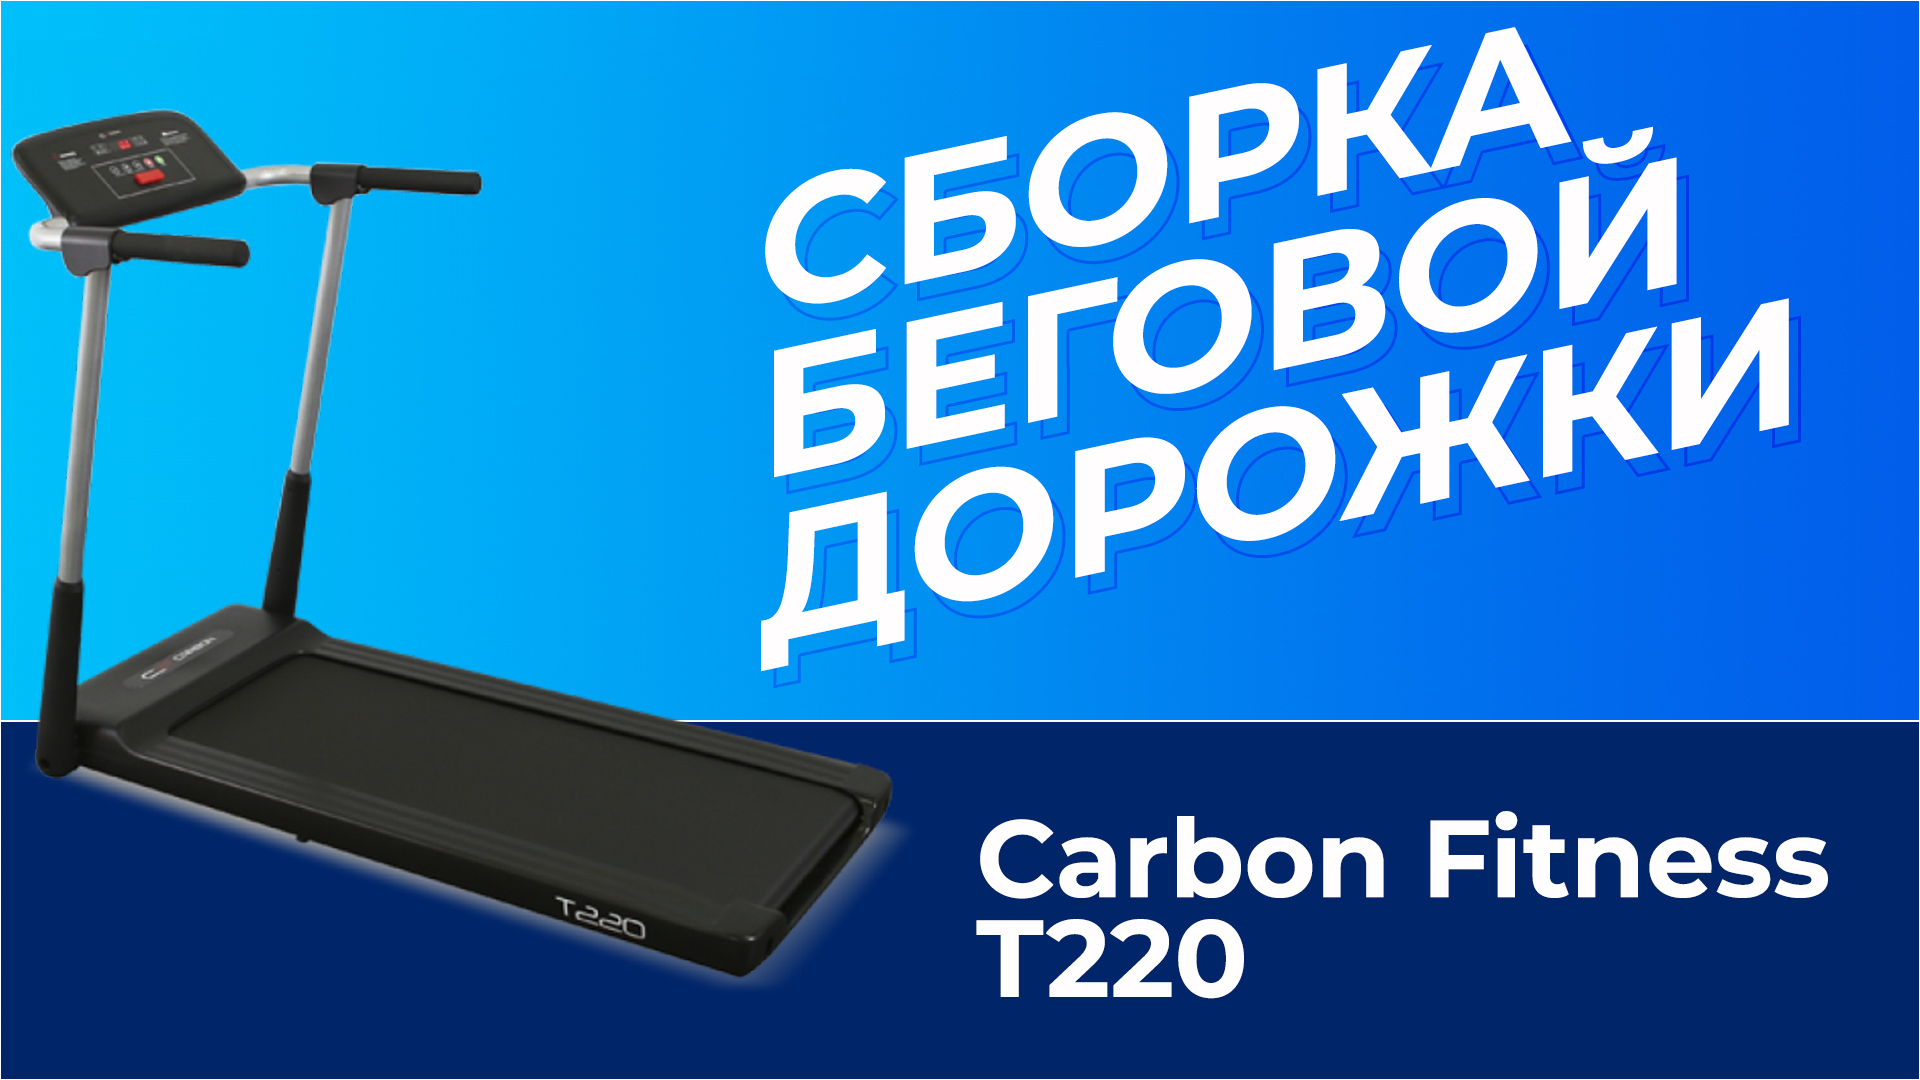 Carbon Fitness T220 | СБОРКА БЕГОВОЙ ДОРОЖКИ | MIR-SPORTA.COM